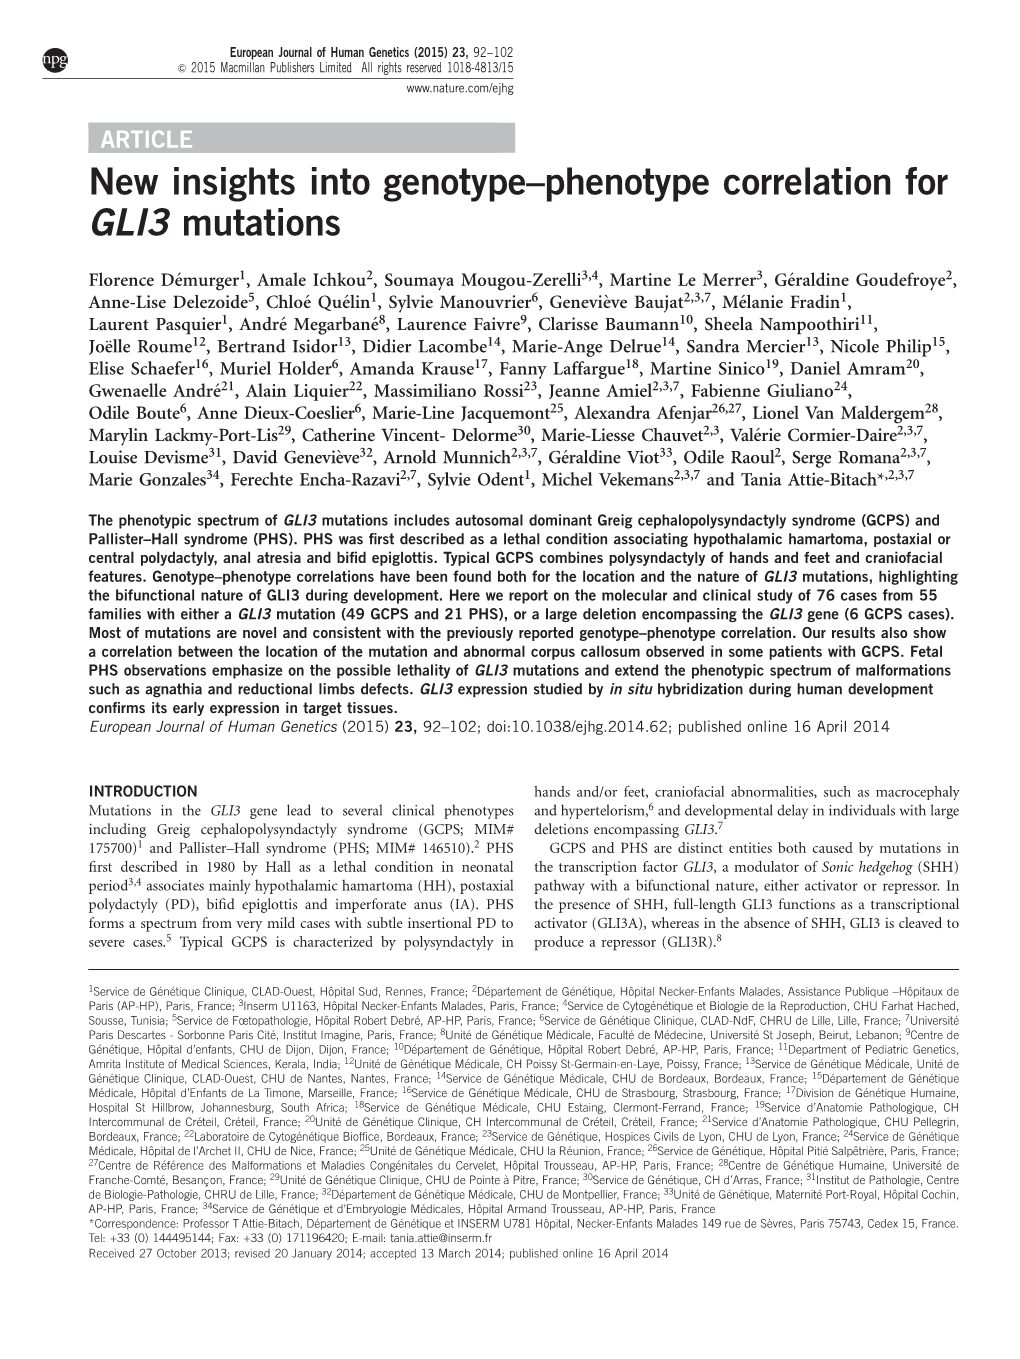 Phenotype Correlation for GLI3 Mutations